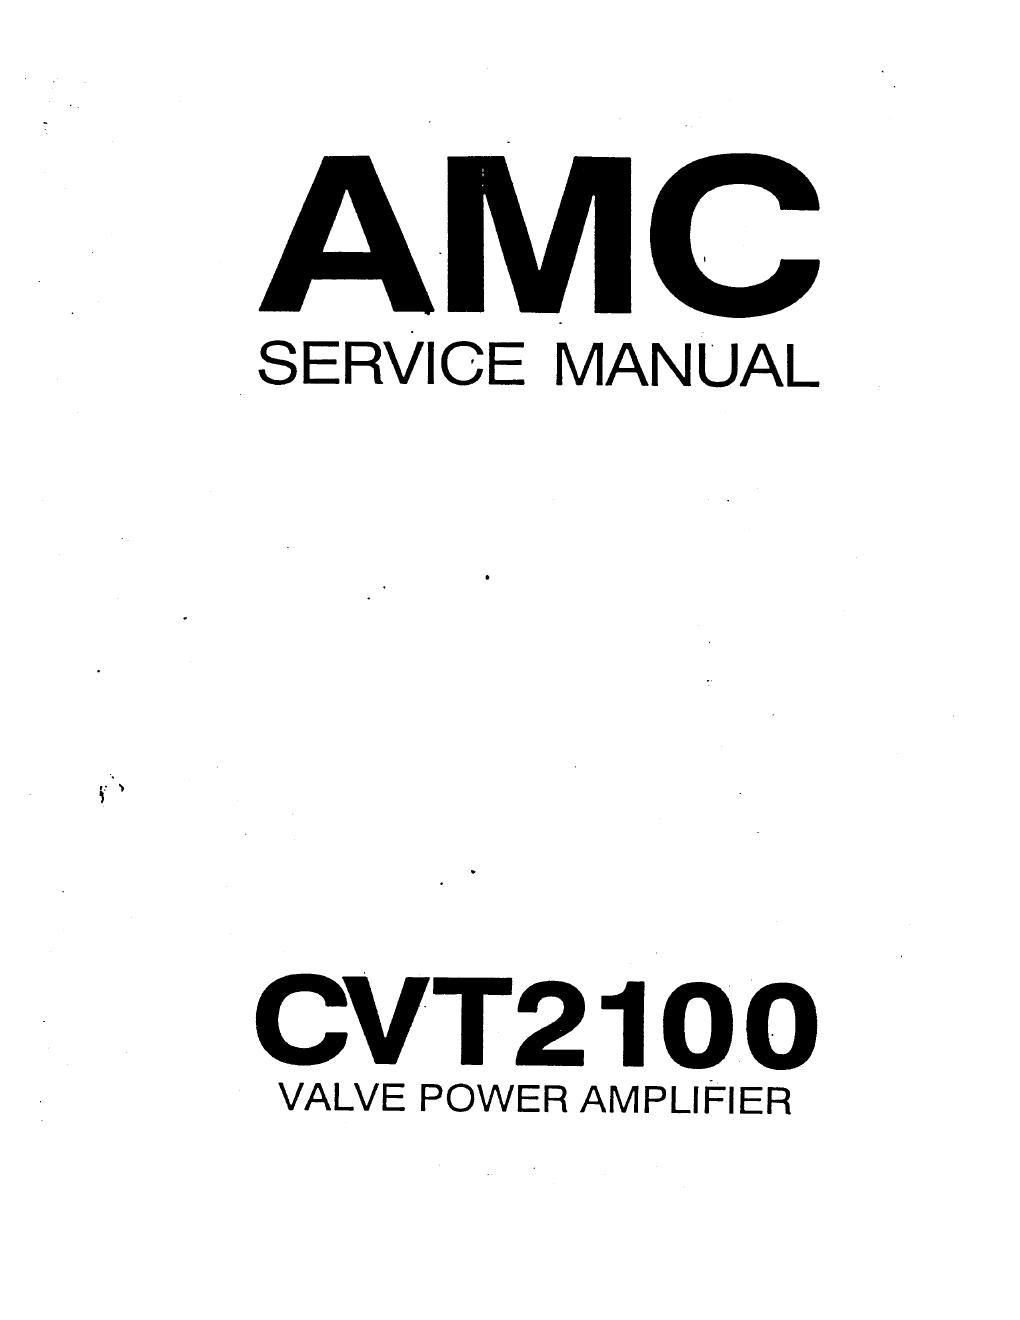 Amc cvt 2100 pwr service manual